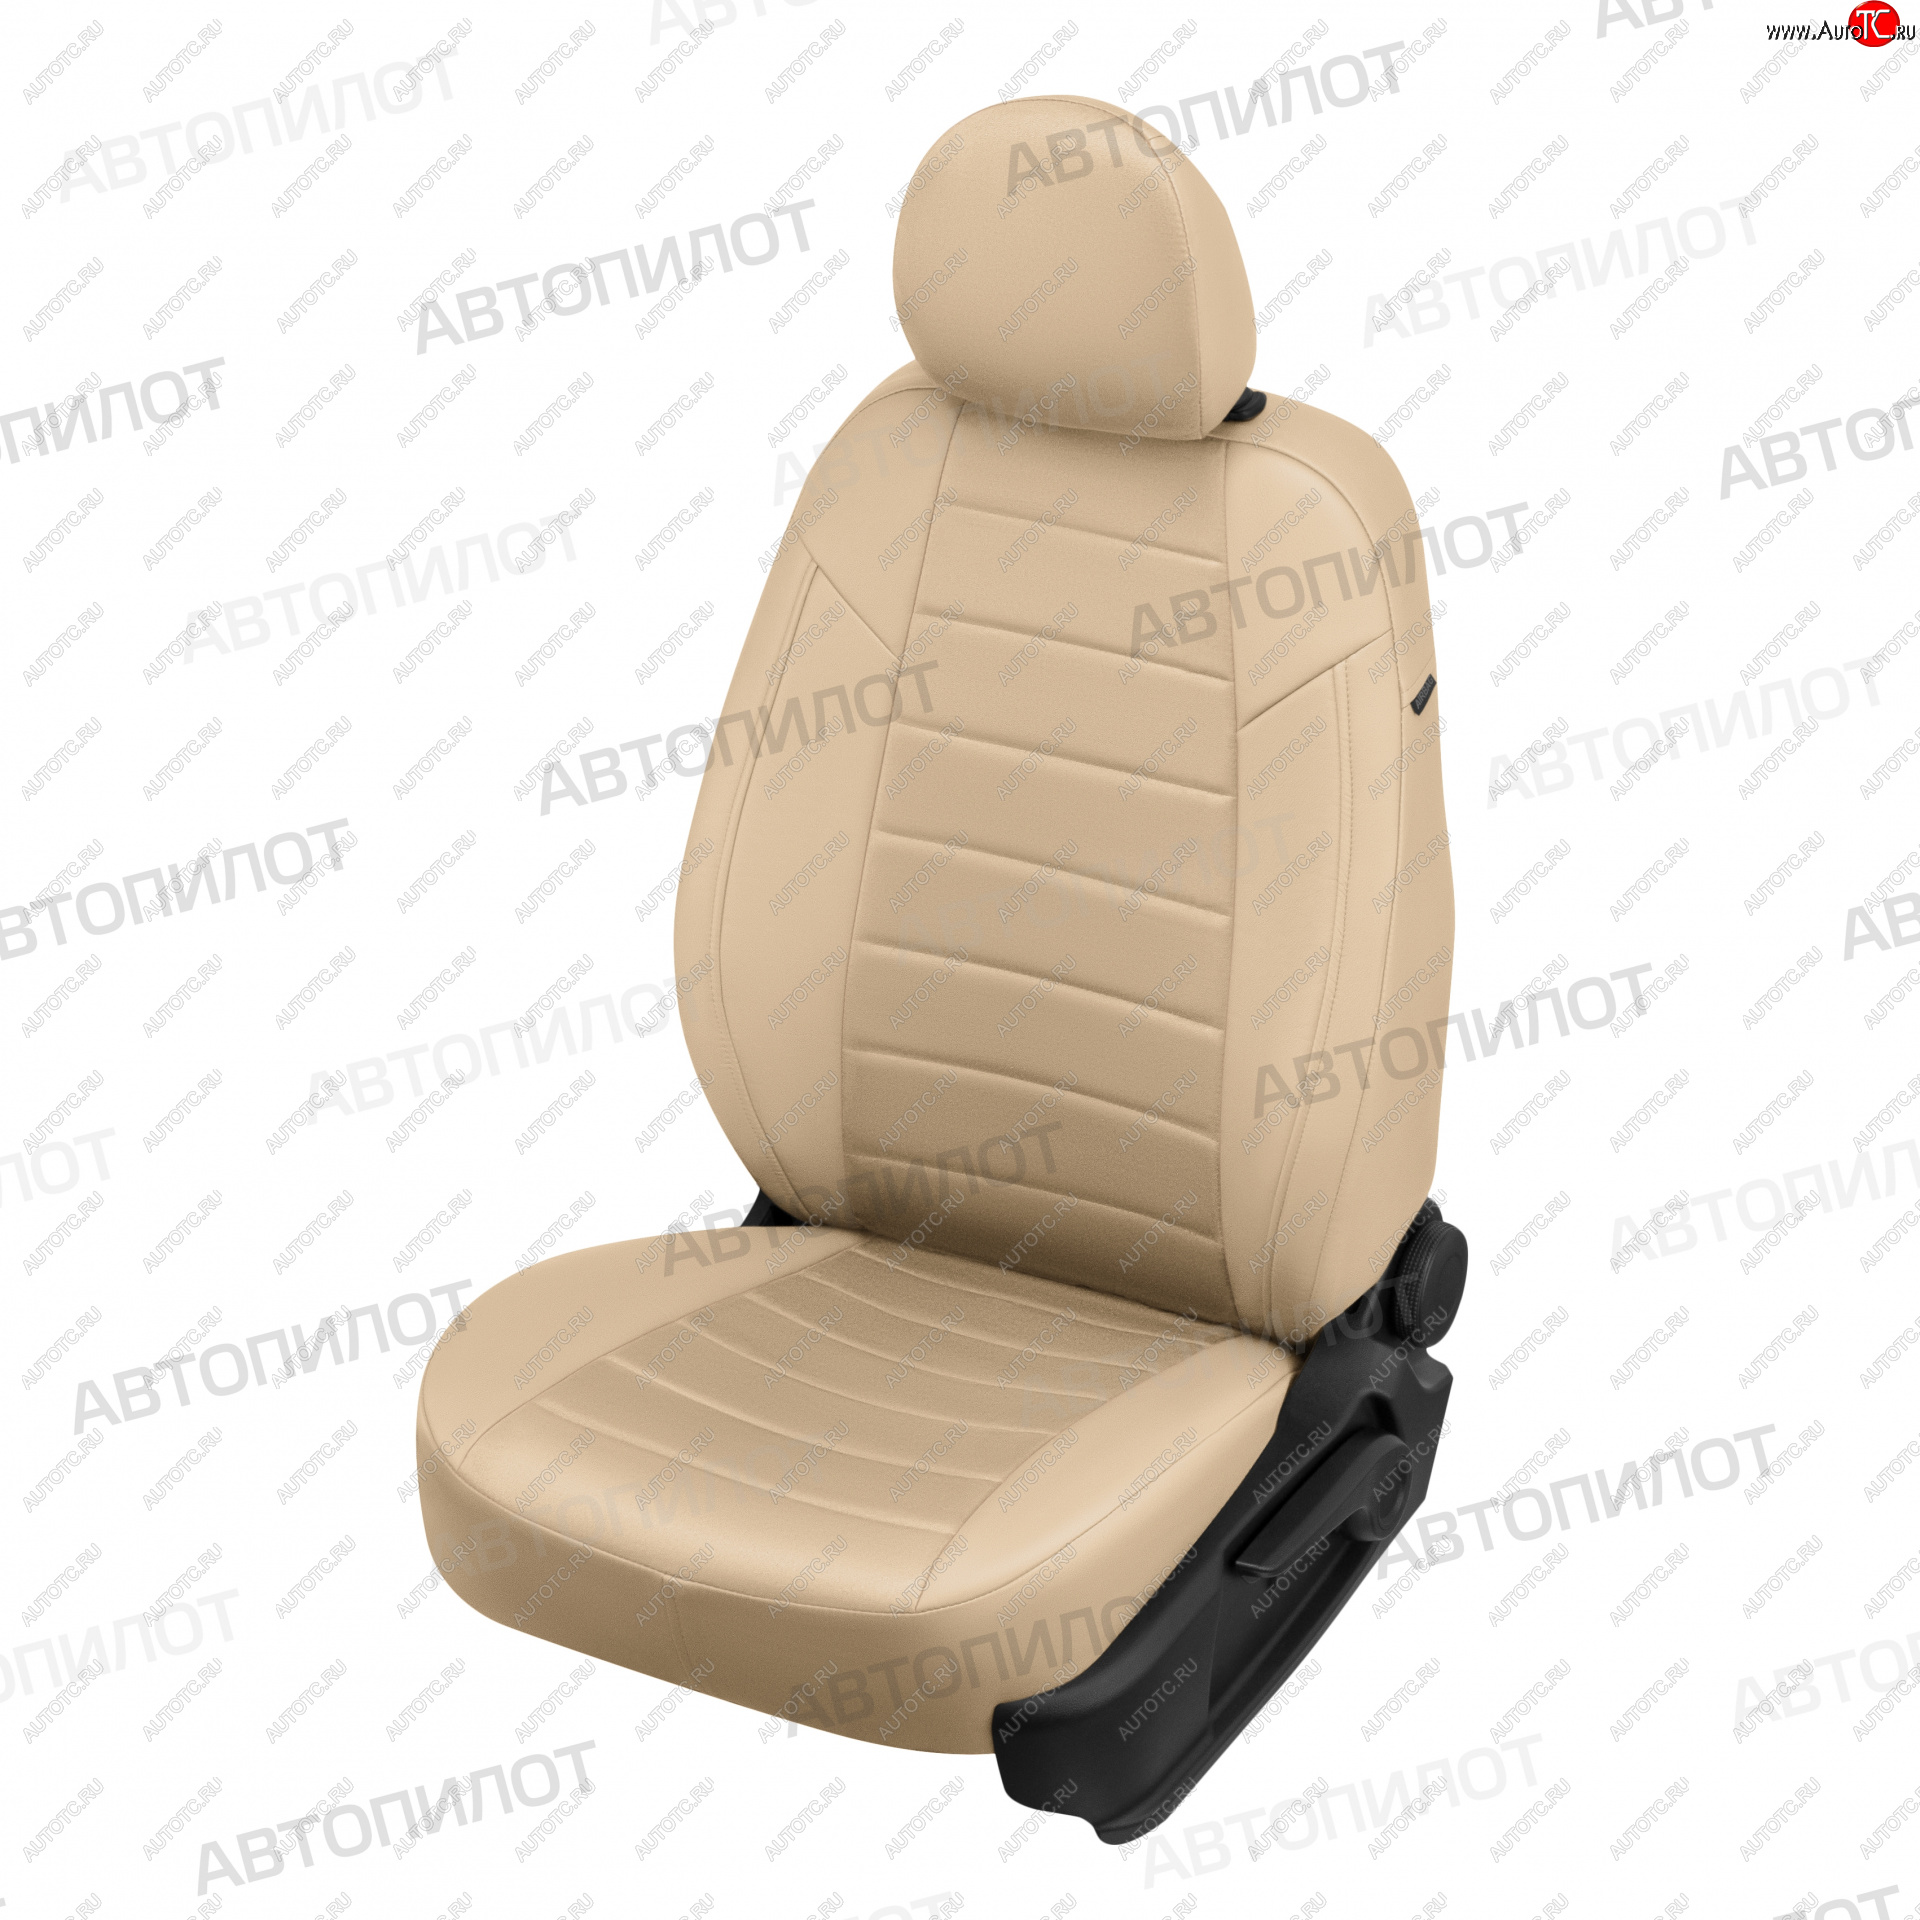 16 899 р. Чехлы сидений (экокожа/алькантара, 7 м.) Автопилот  Chevrolet Orlando (2011-2018) (бежевый)